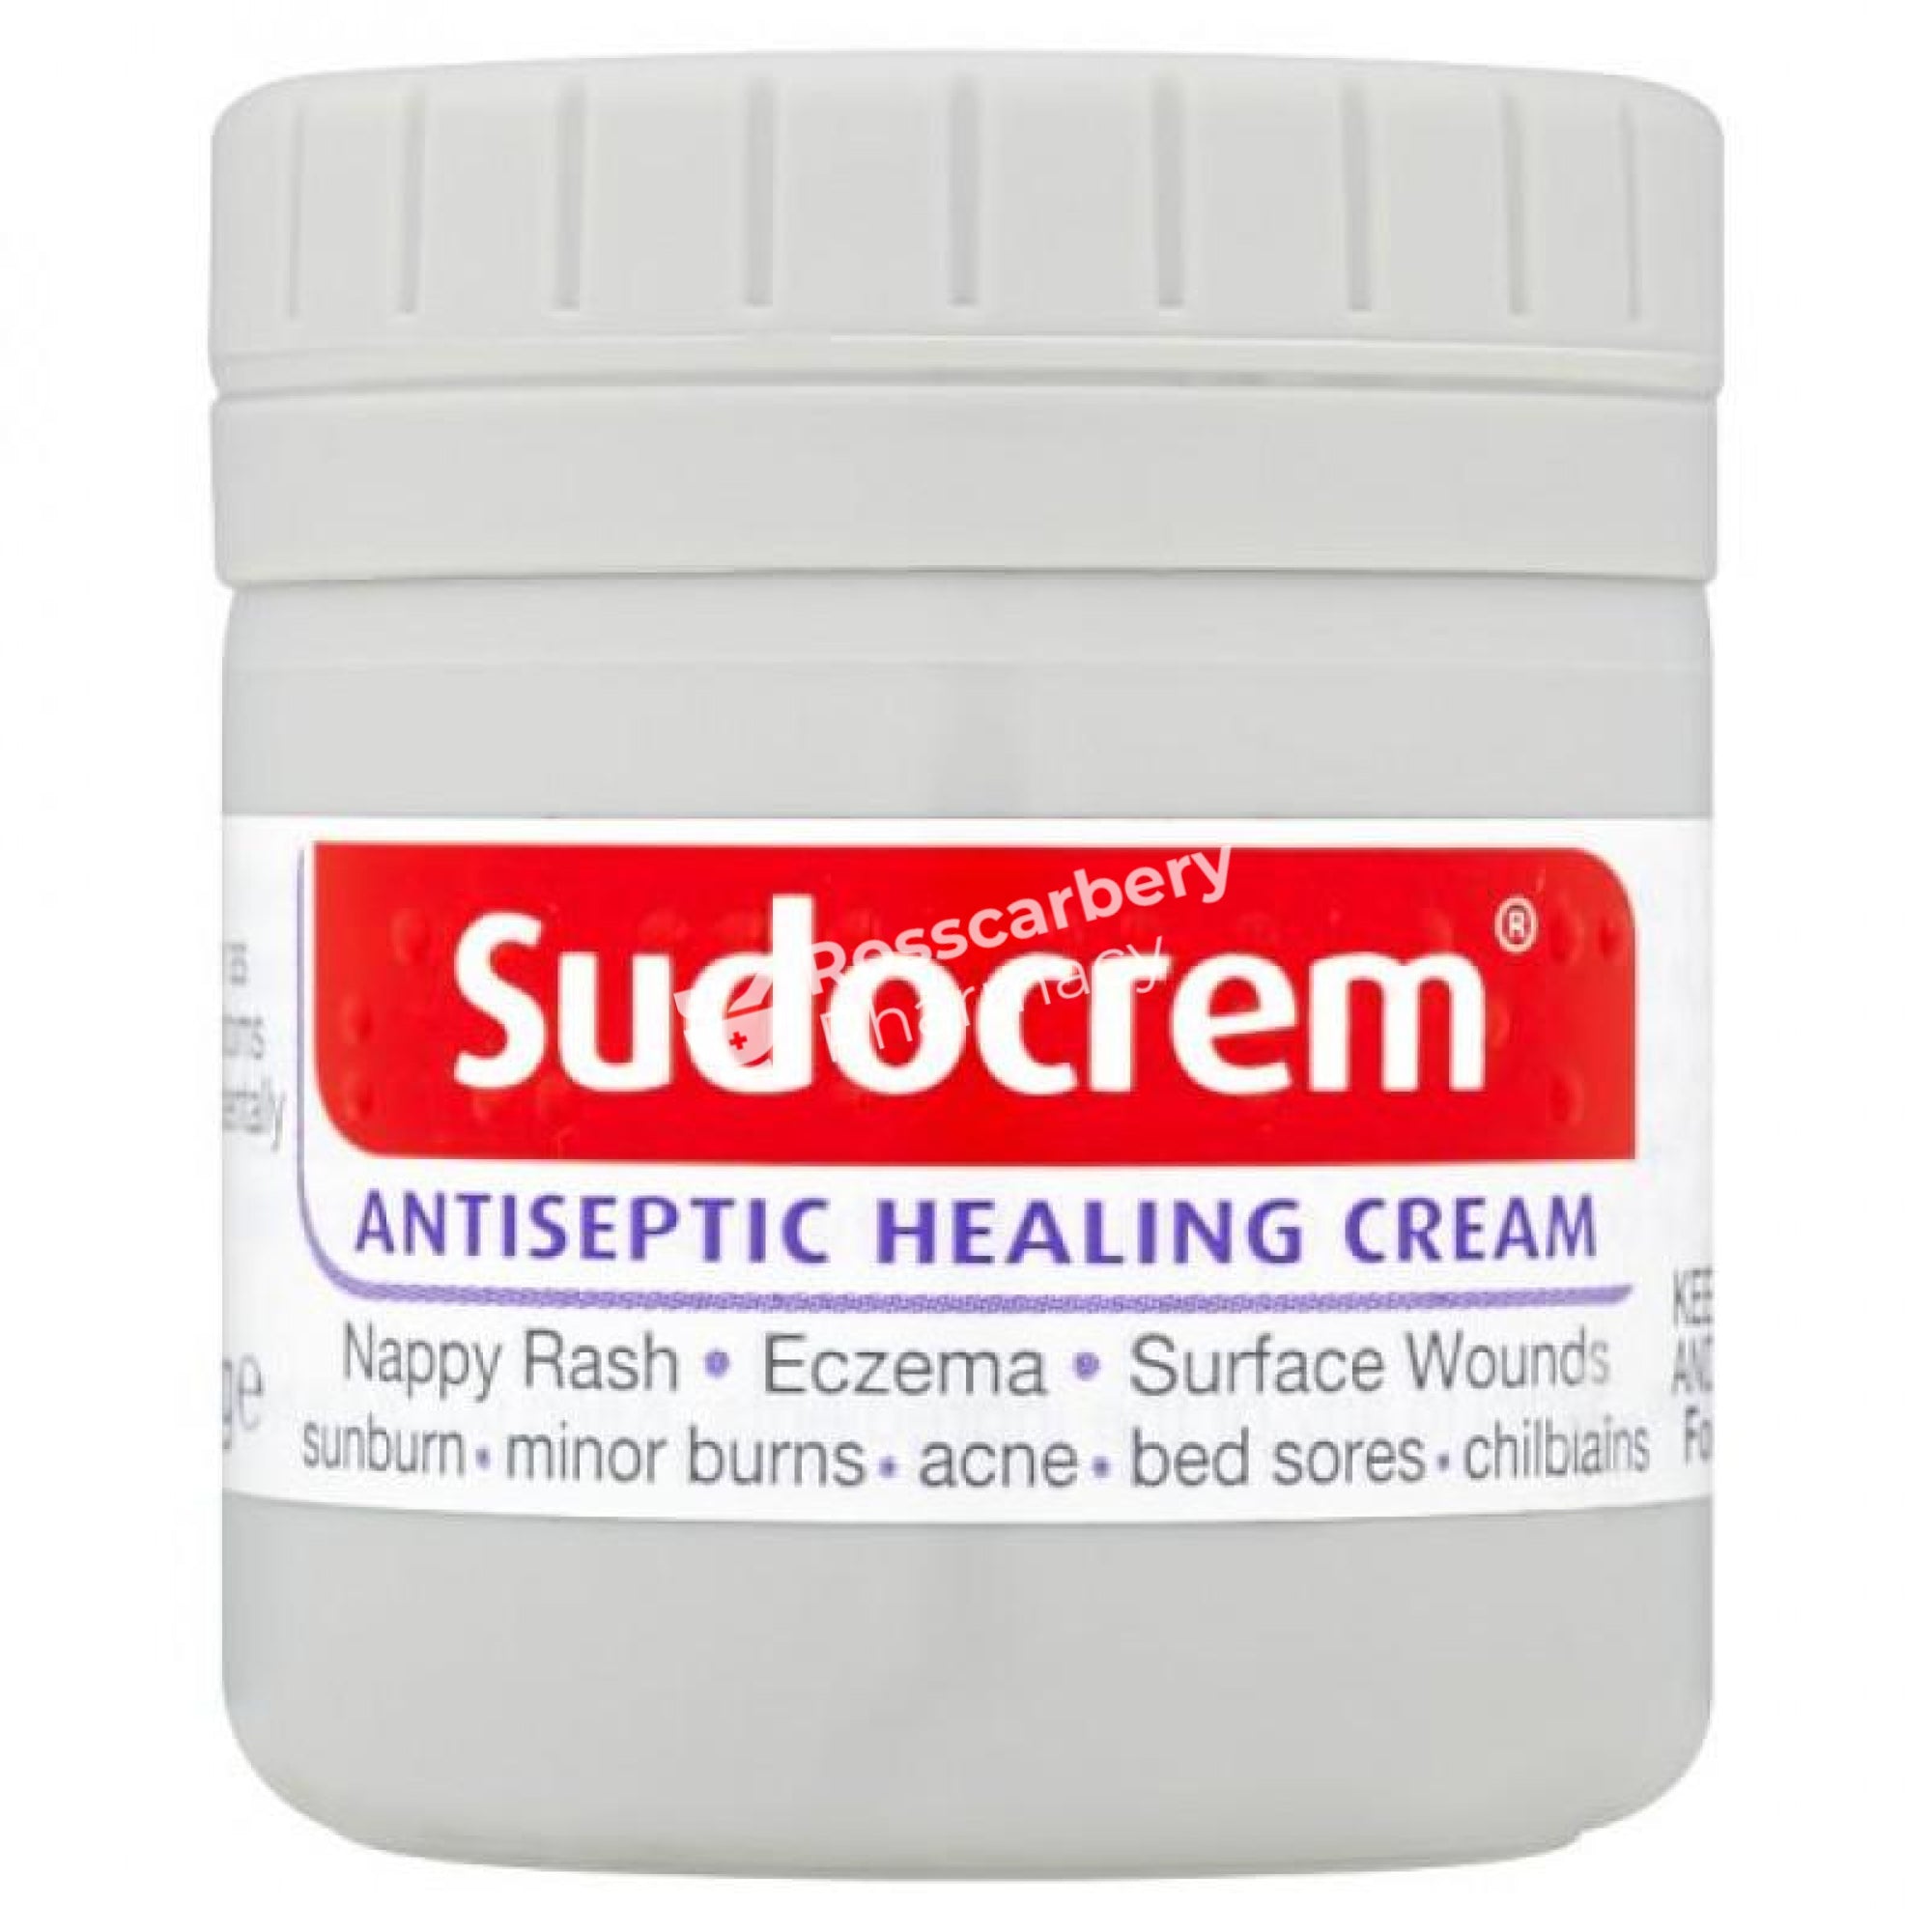 Sudocrem Antiseptic Healing Cream Tub & Wound